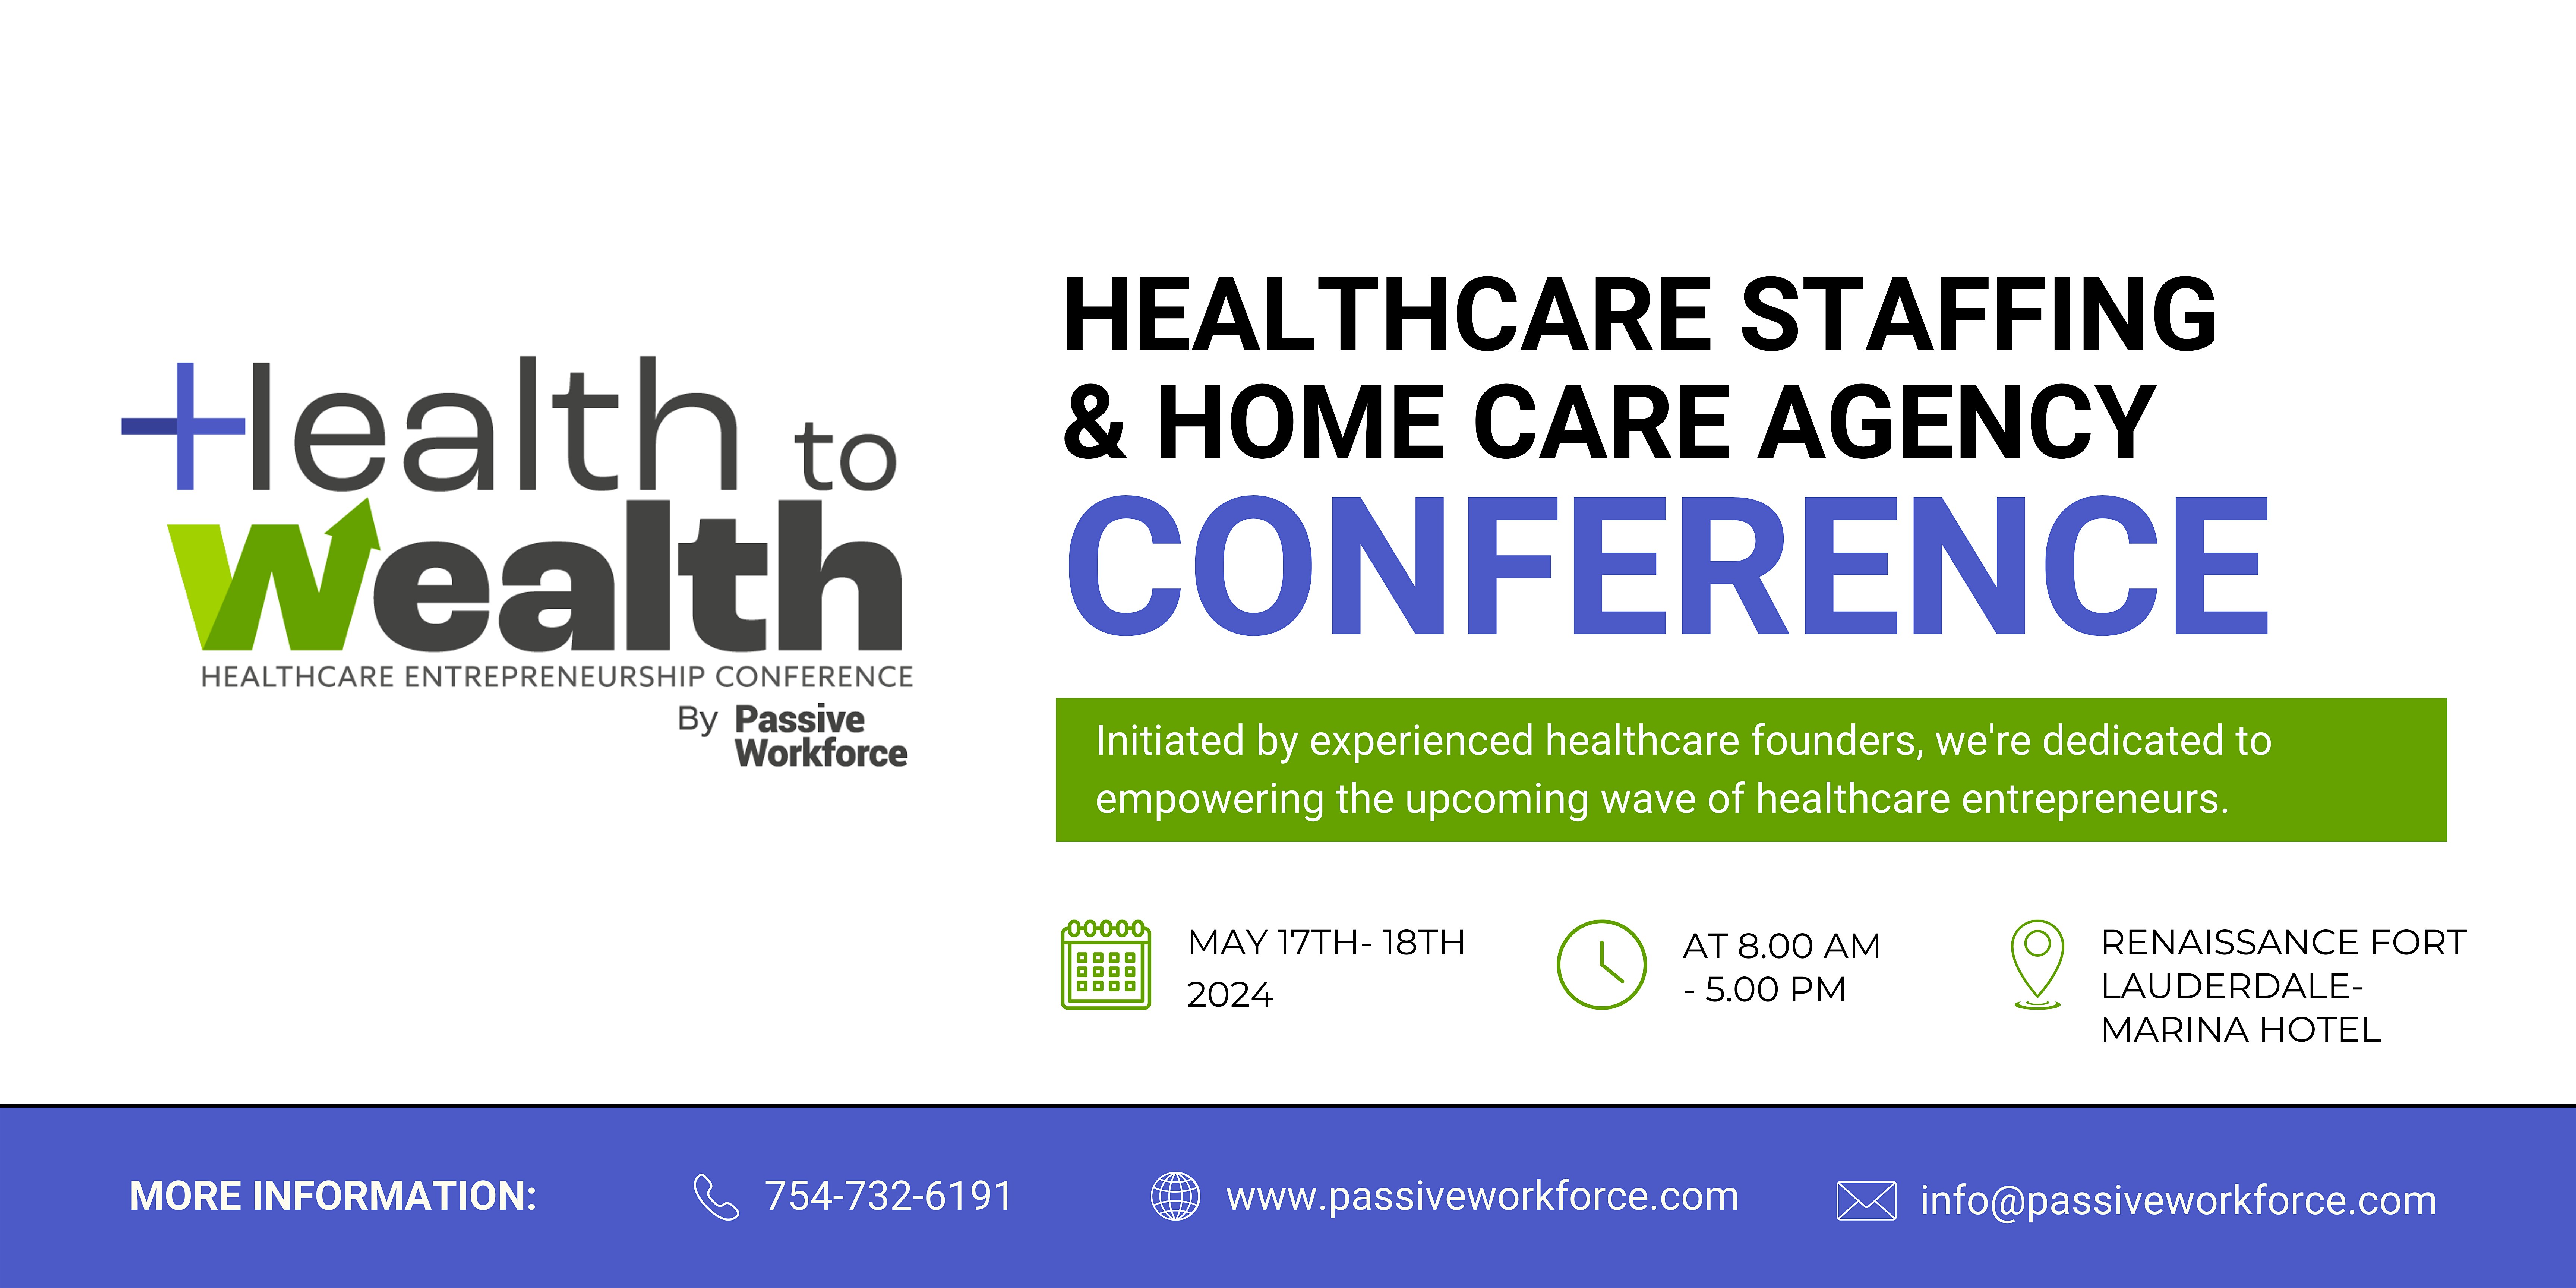 Health to Wealth: Healthcare Entrepreneurship Conference